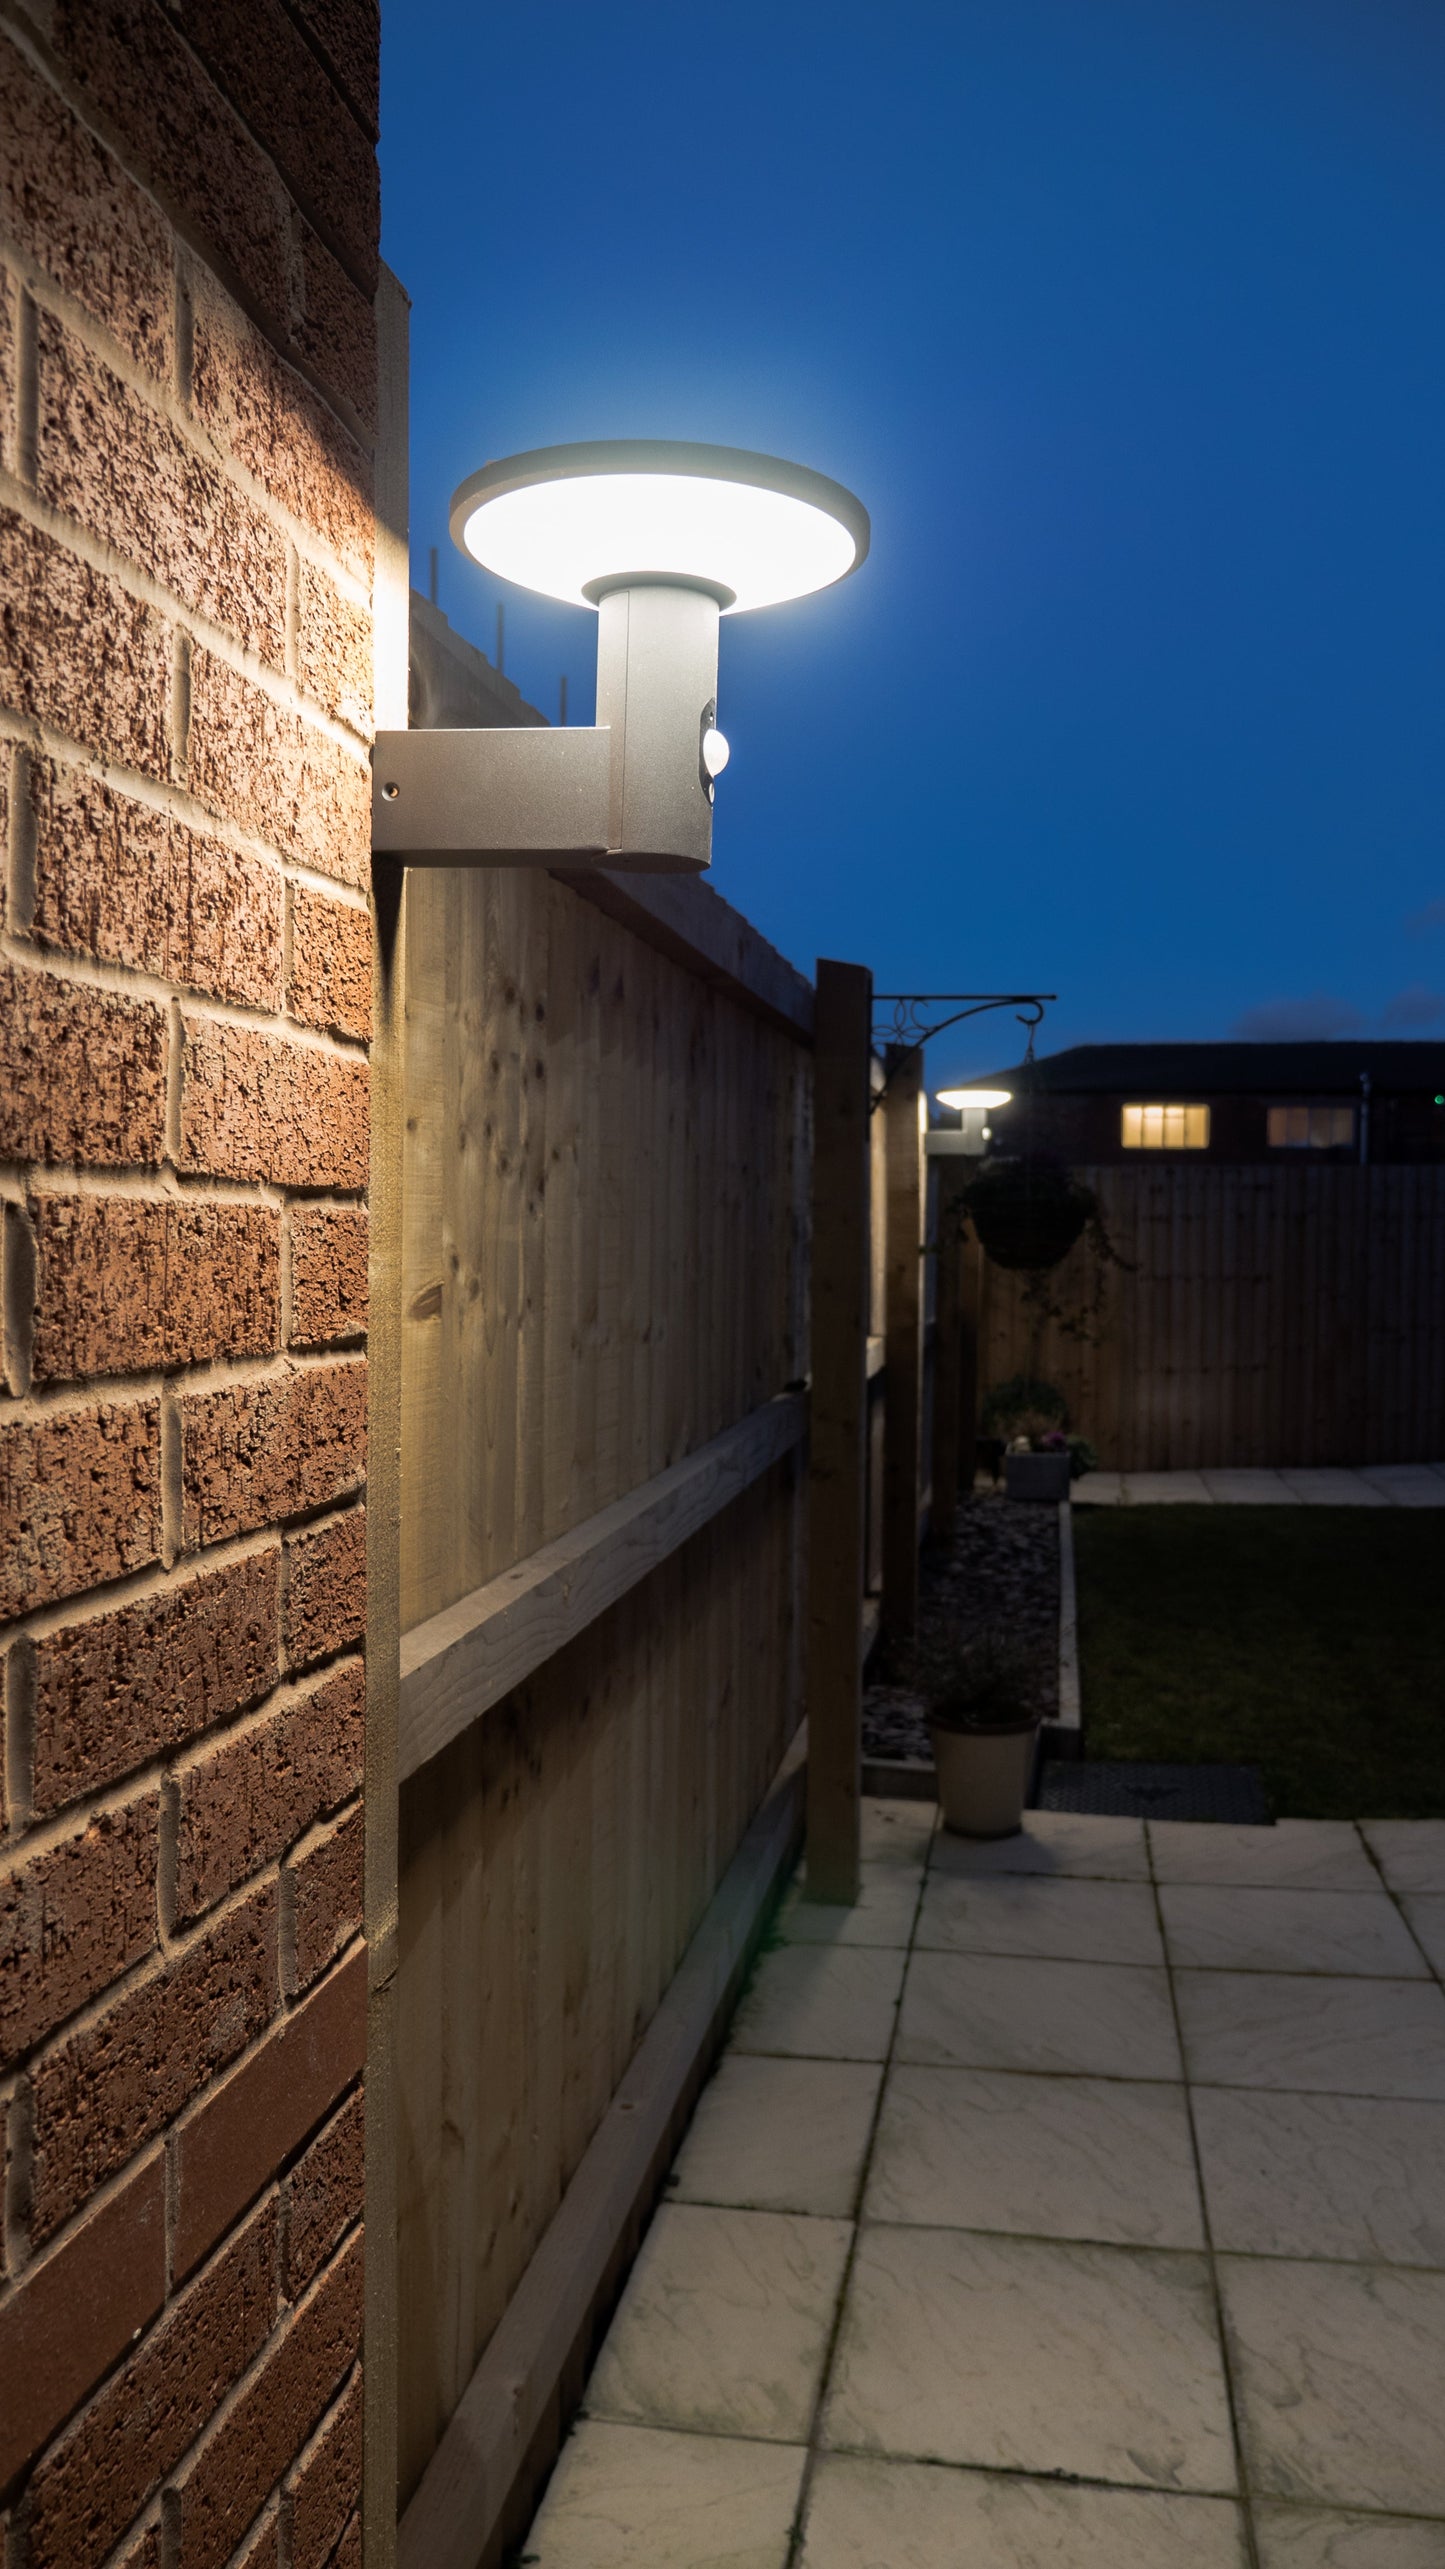 4lite Die-Cast Aluminium Circular Solar LED Talana Wall Light with Motion Detector - Graphite - maplin.co.uk